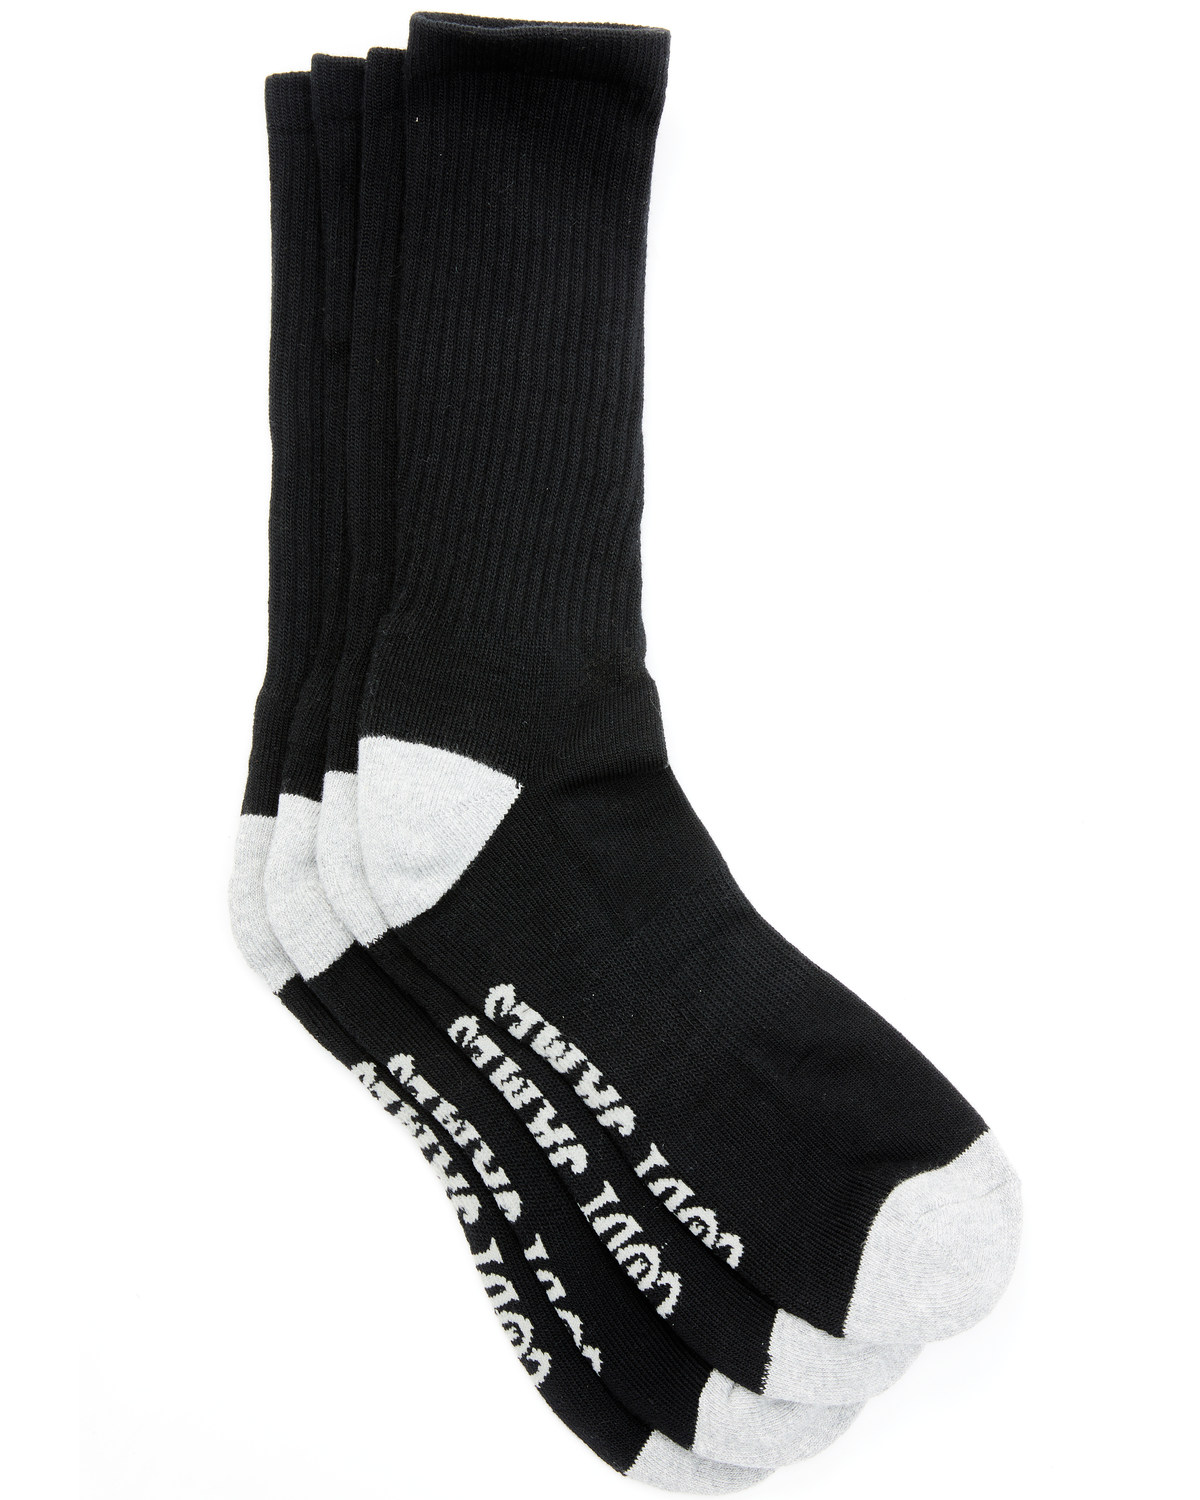 Cody James Men's Crew Socks With Moisture Management - 2 Pack